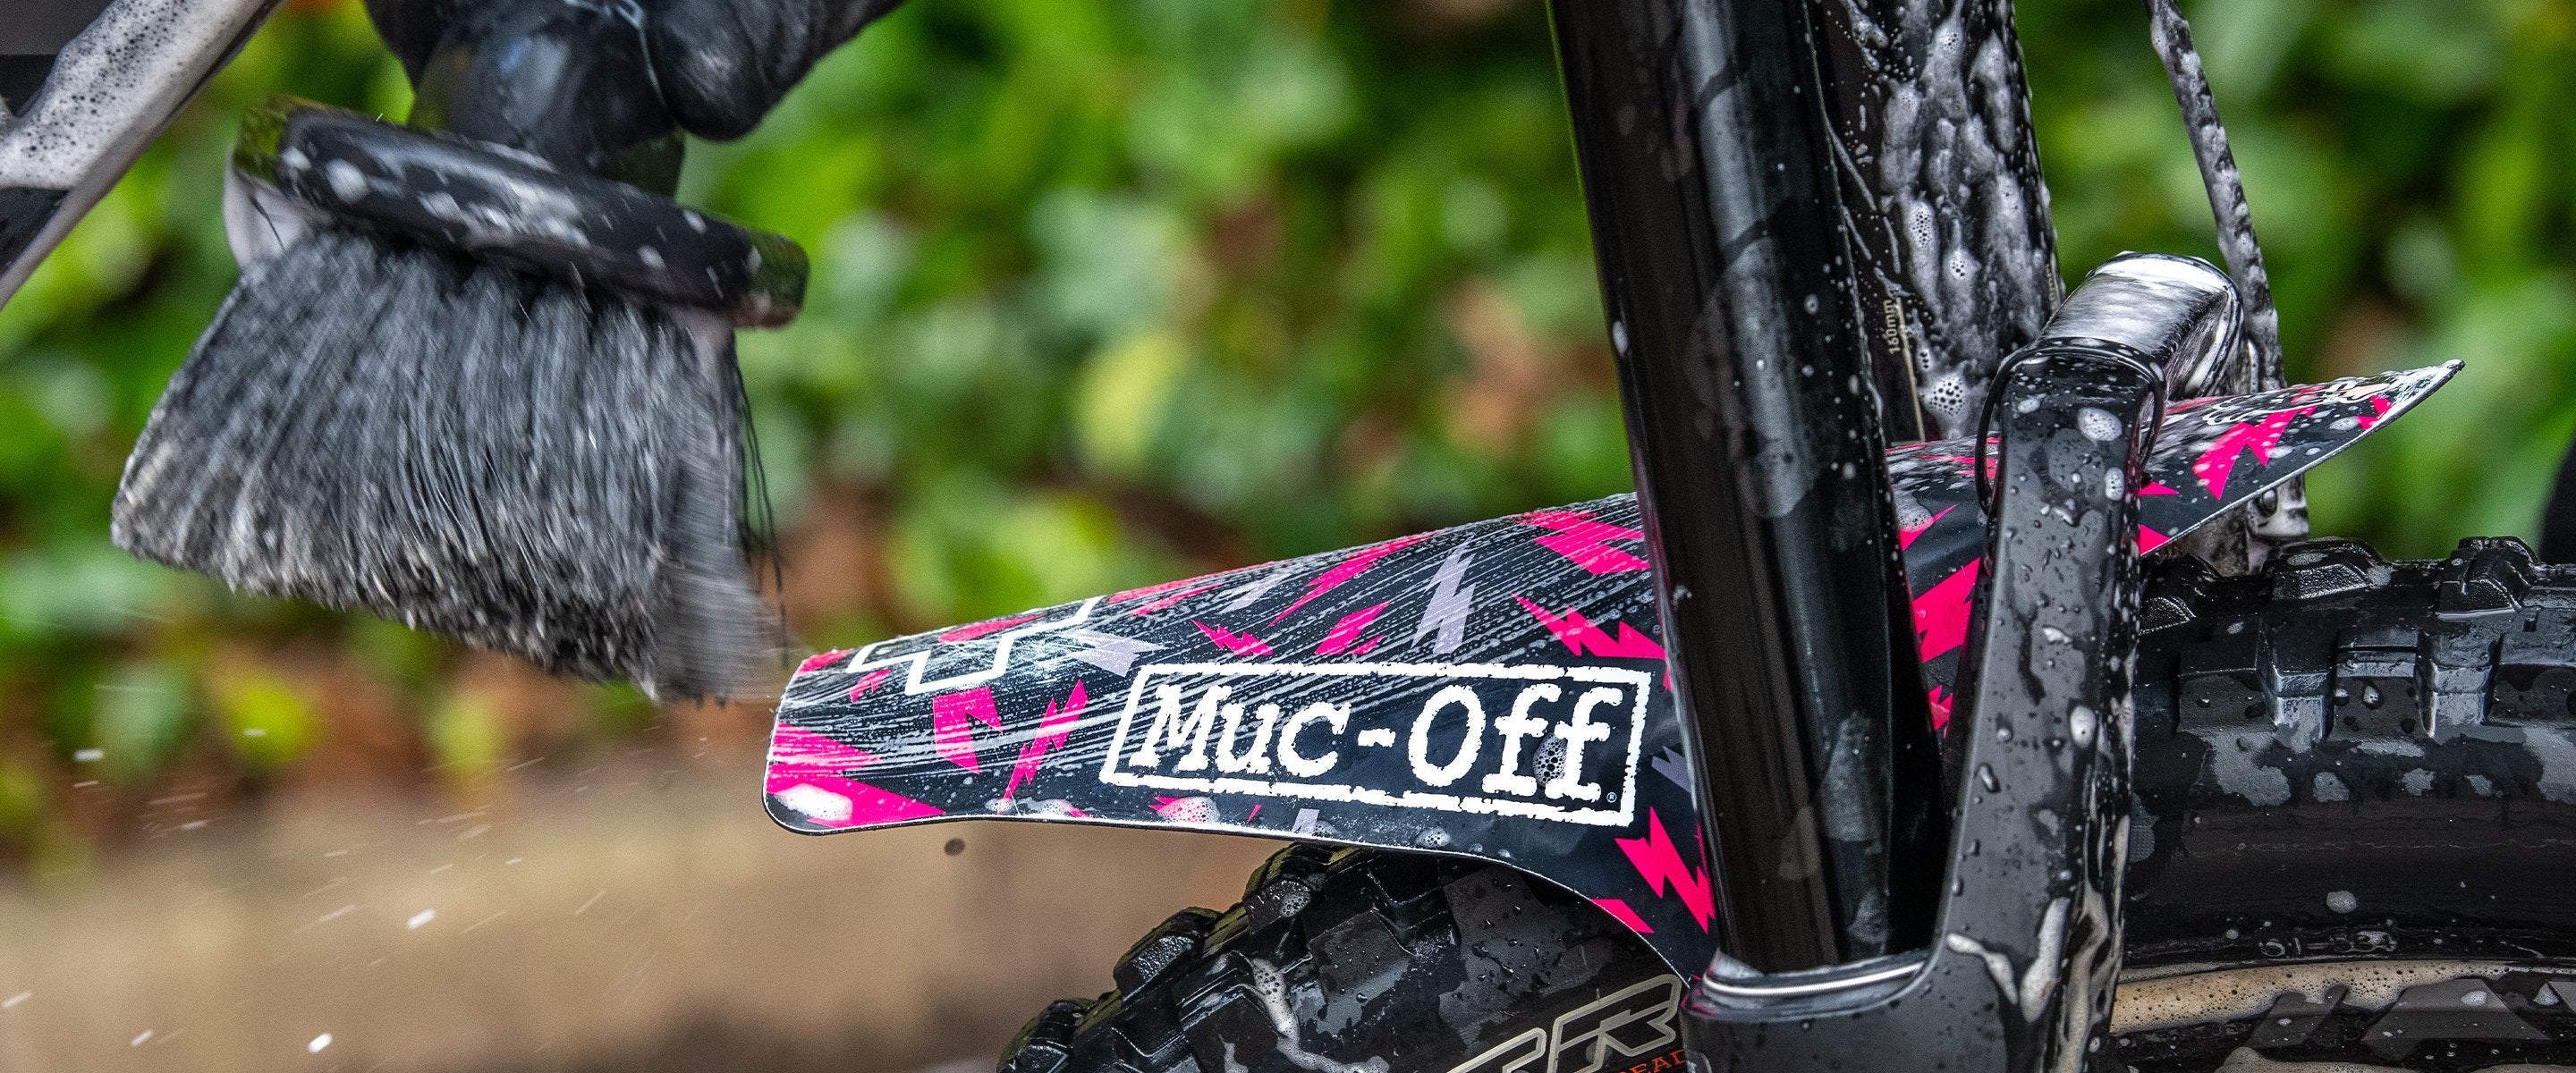 Muc-off bolt front mud guard wheelie bike shop uk